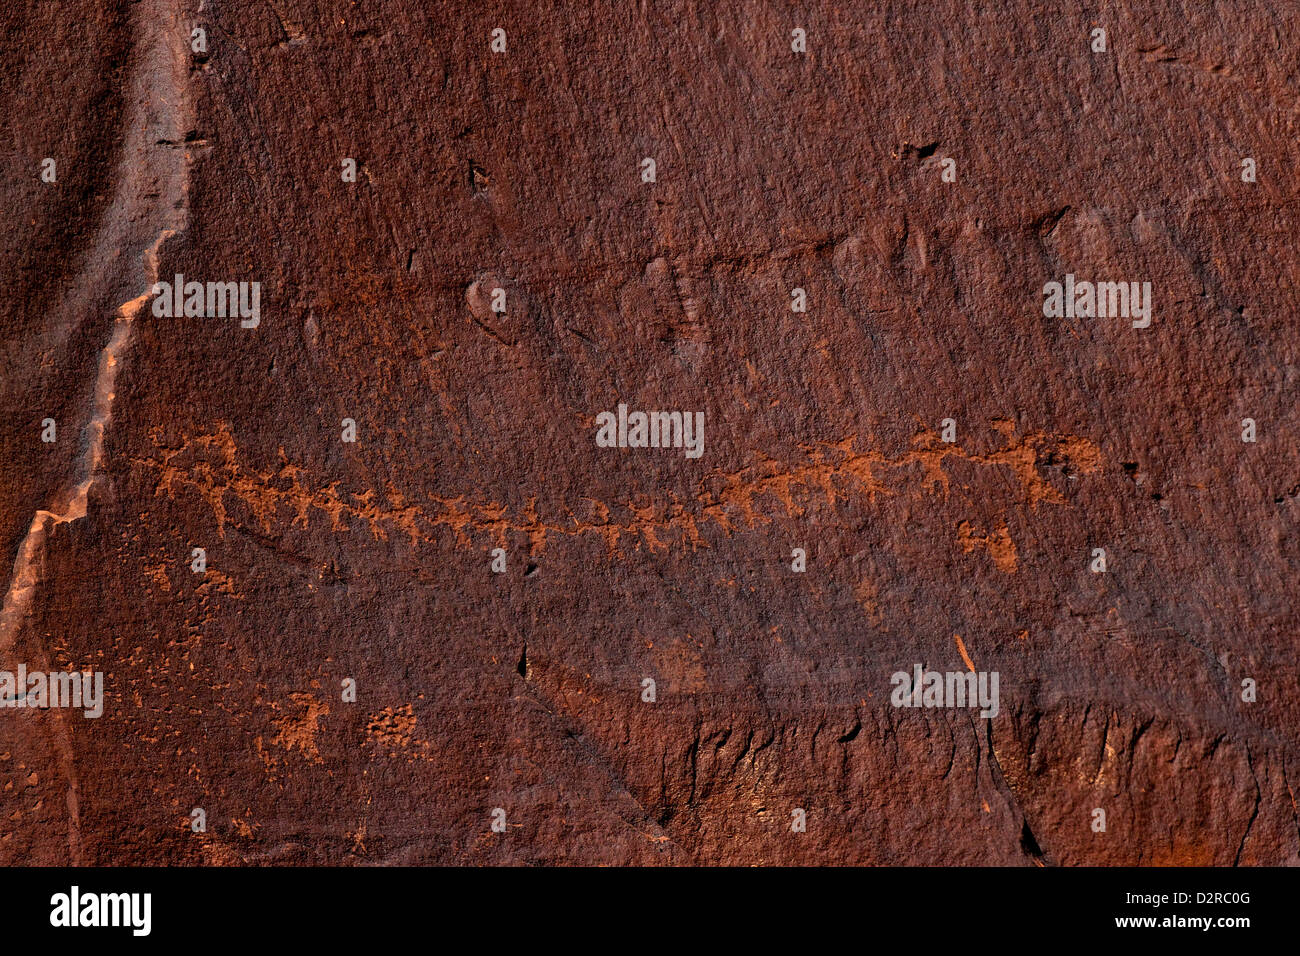 Paper doll cutouts, Formative Period Petroglyphs, Utah Scenic Byway 279, Potash Road, Rock Art Sites, Moab, Utah, USA Stock Photo